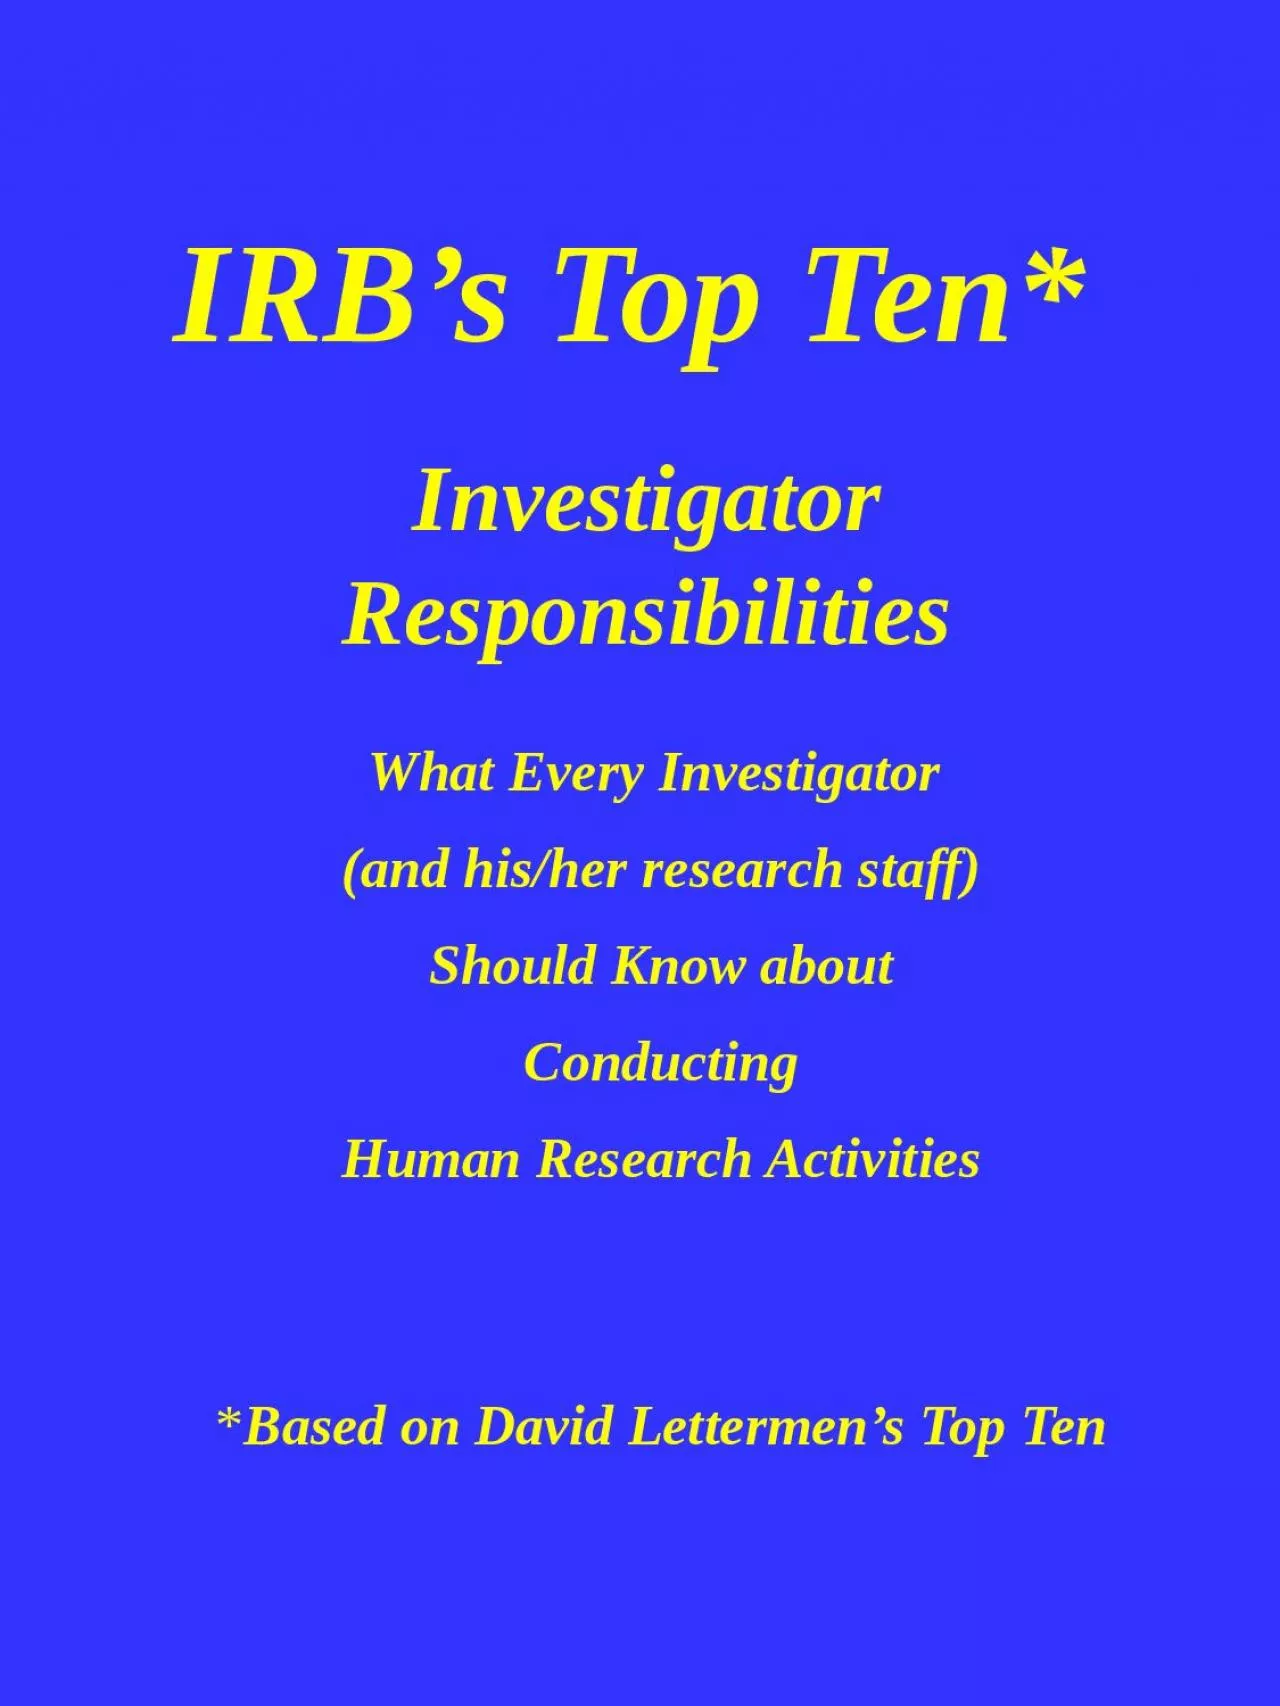 IRB’s Top Ten* Investigator Responsibilities